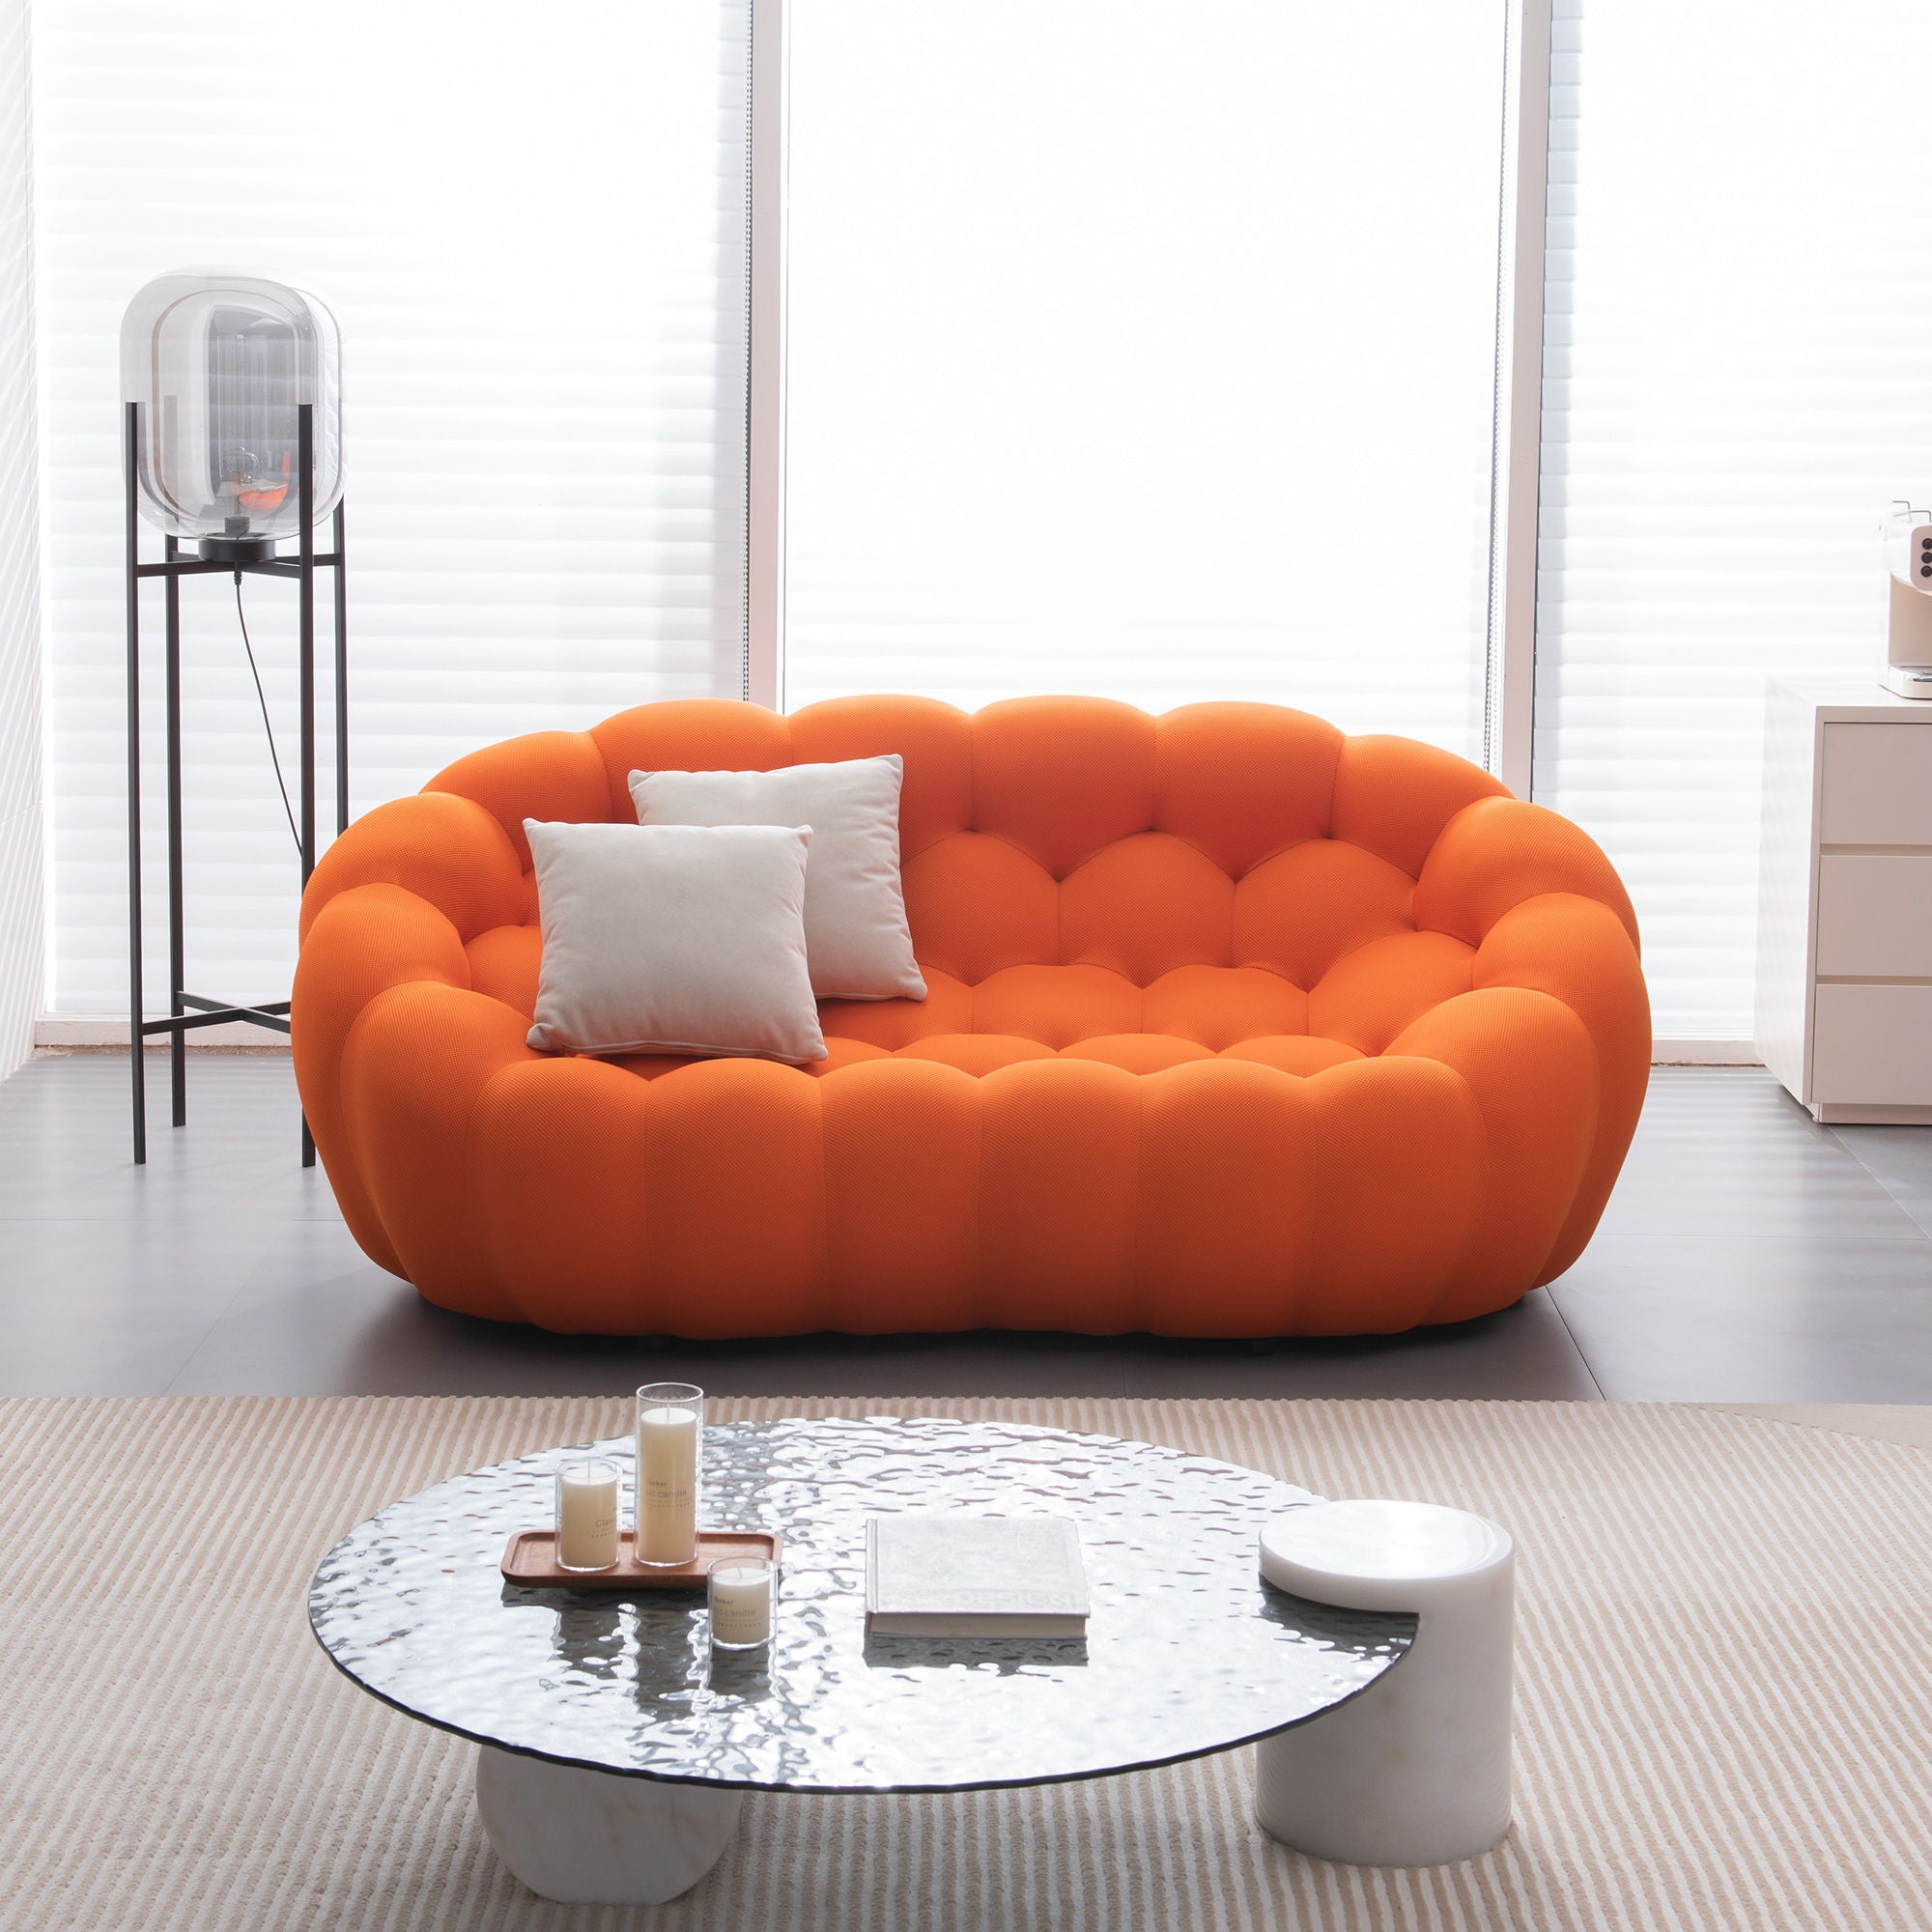 Modern Bubble Floor Couch For Living Room, Orange